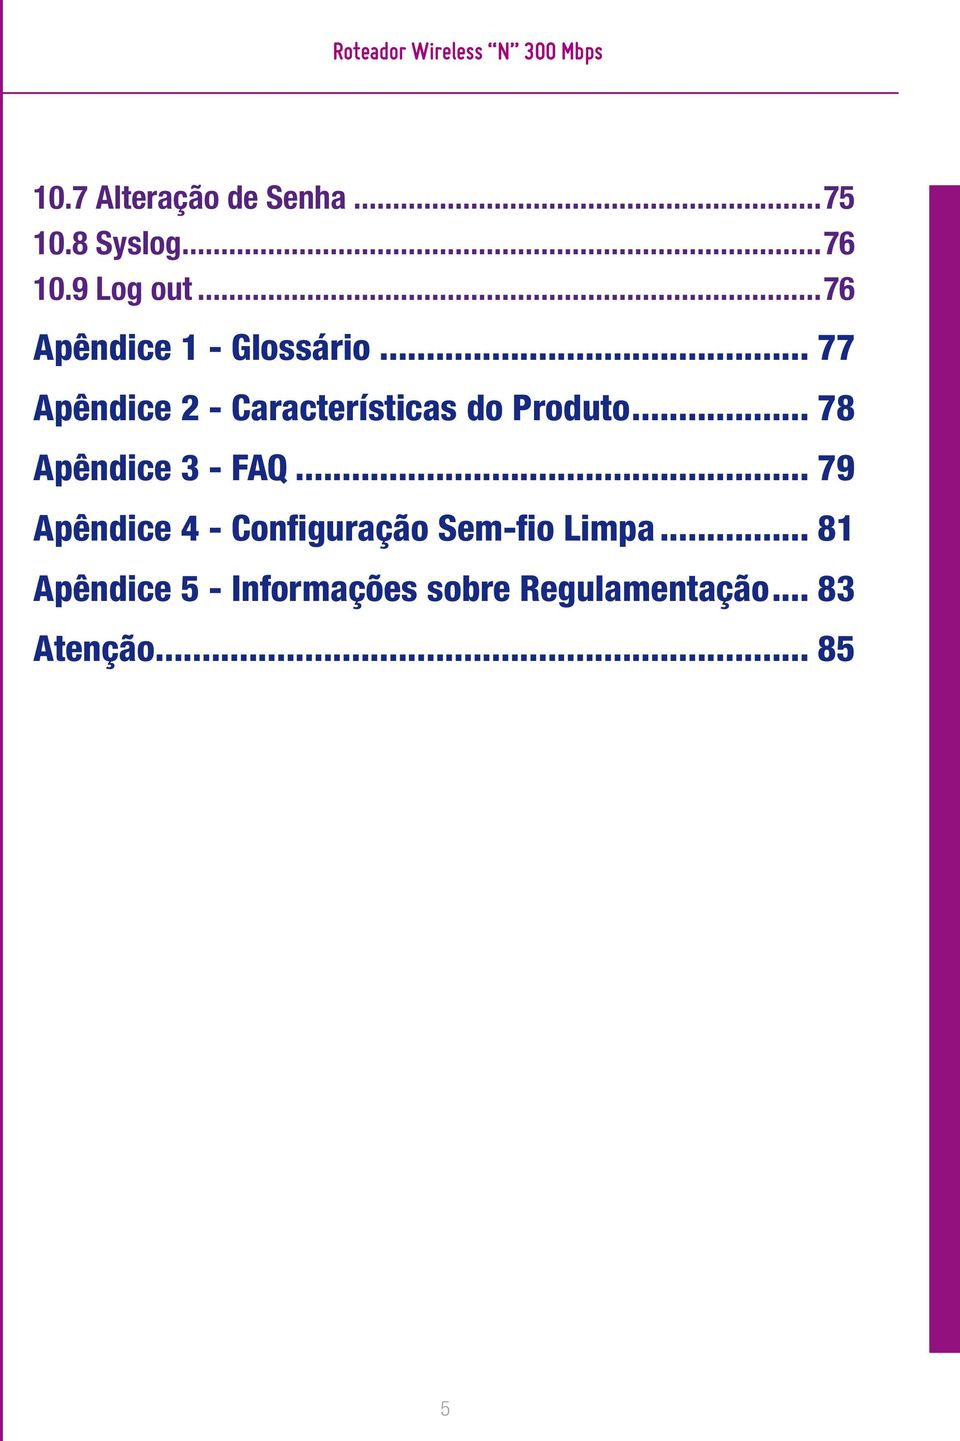 .. 77 Apêndice 2 - Características do Produto... 78 Apêndice 3 - FAQ.